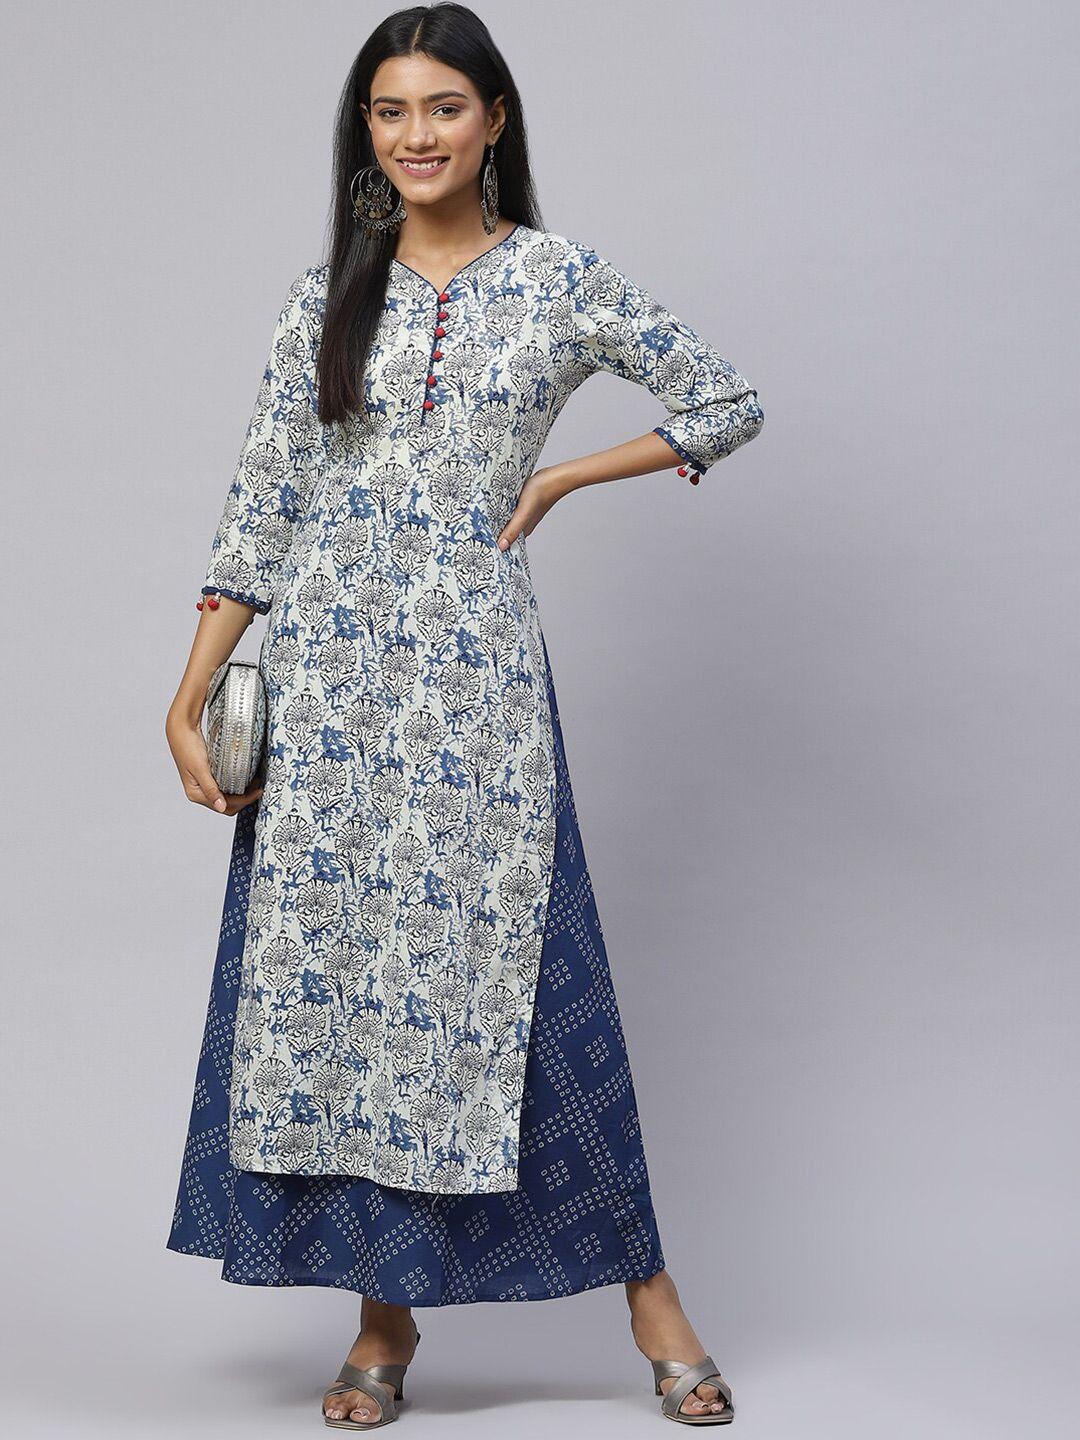 iridaa jaipur white & blue ethnic motifs ethnic maxi dress